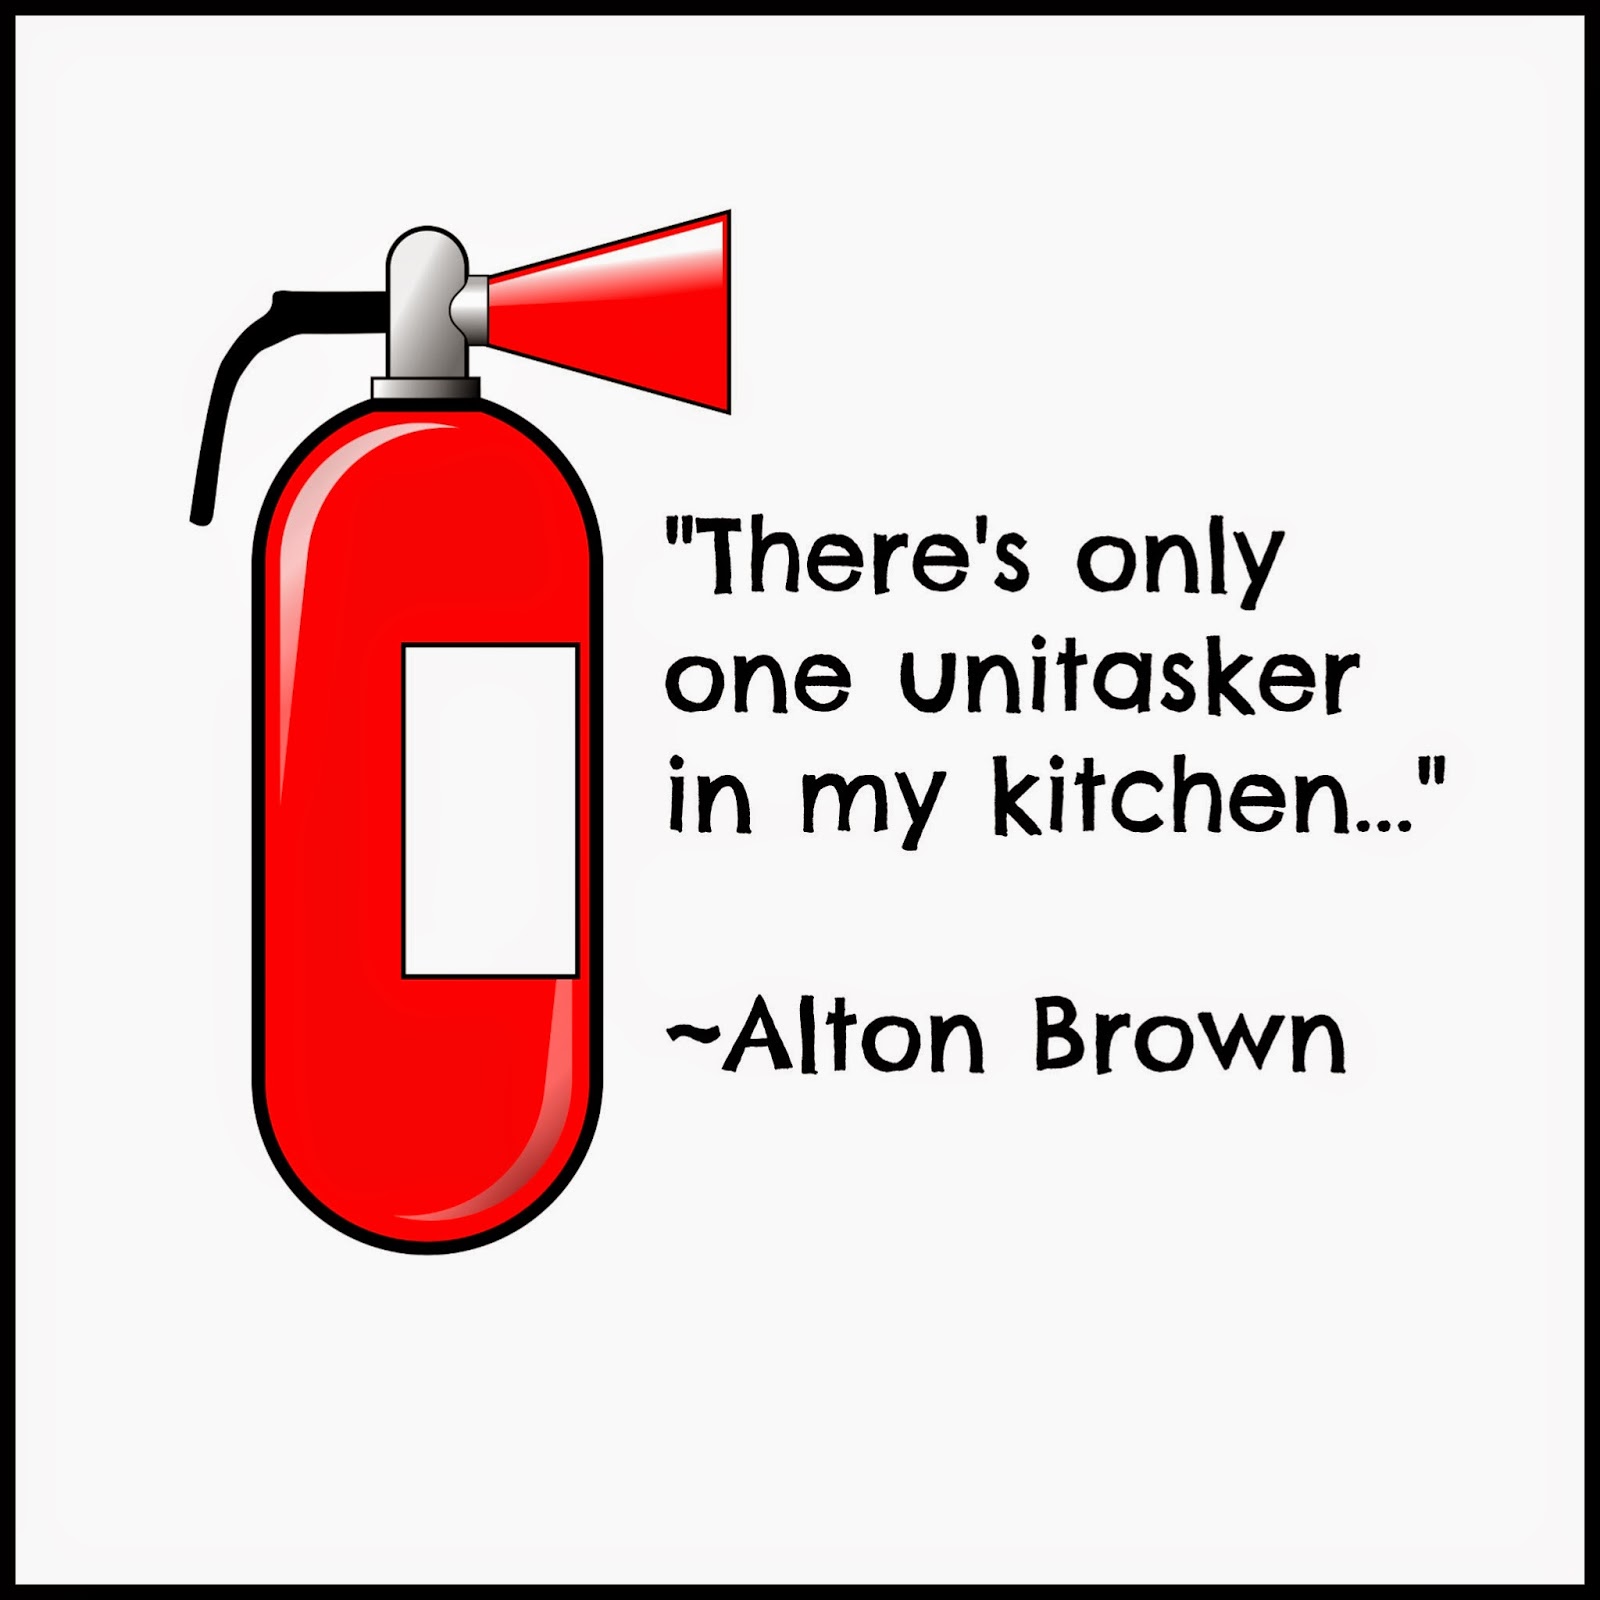 Only one unitasker allowed. -Alton Brown